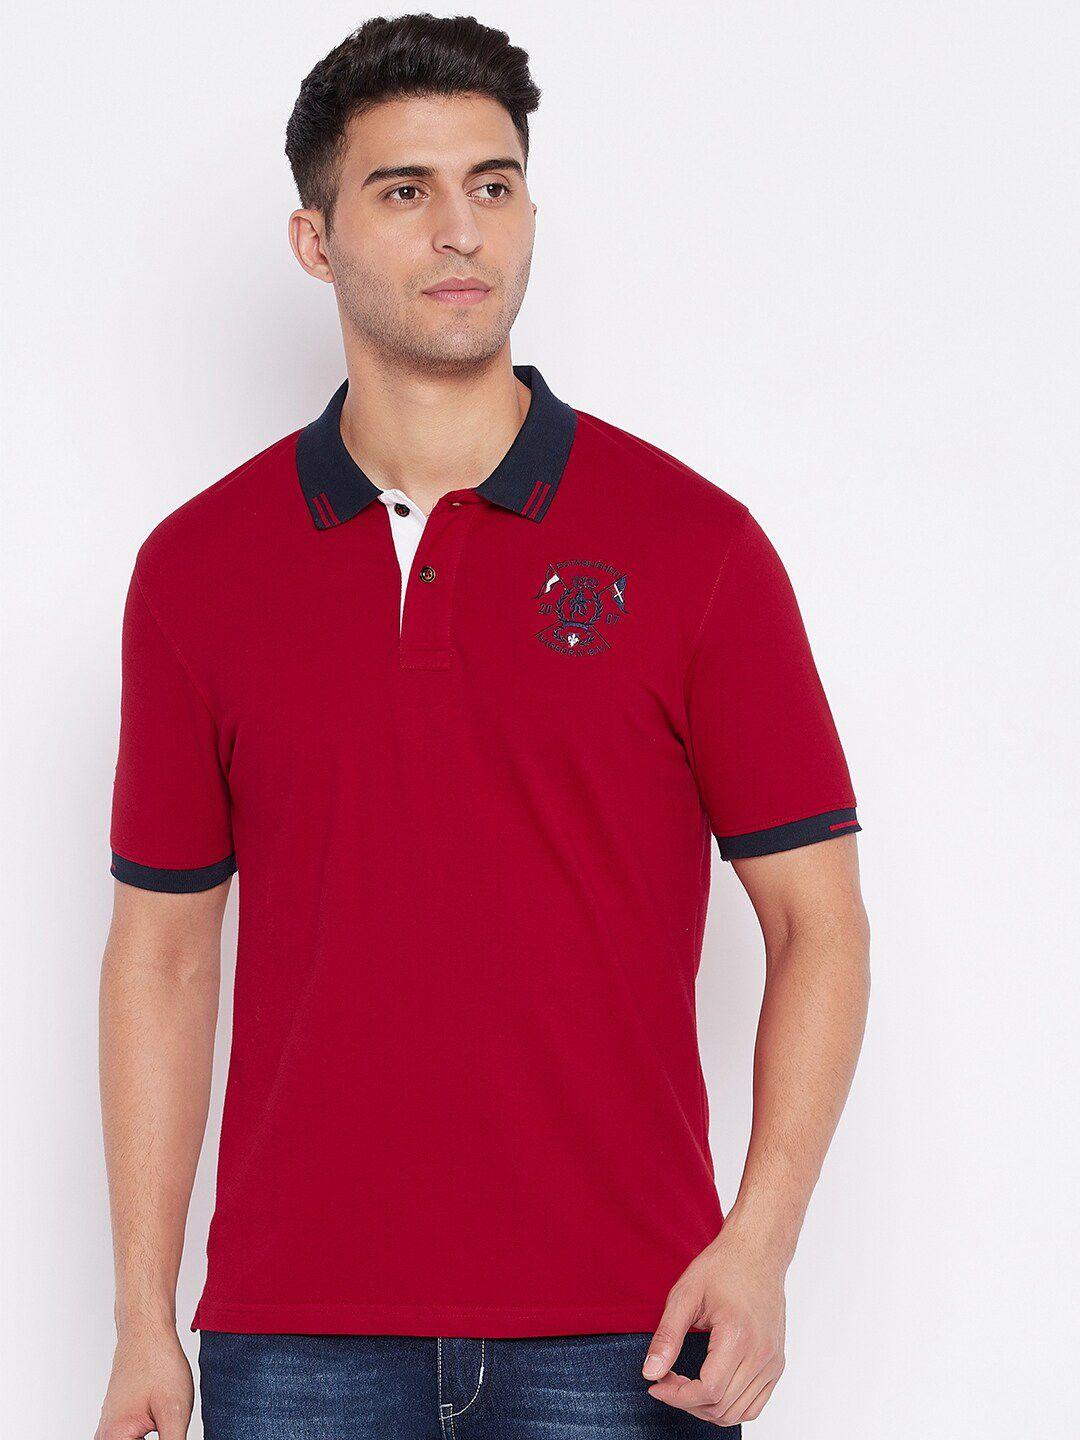 harbor-n-bay-men-red-polo-collar-t-shirt